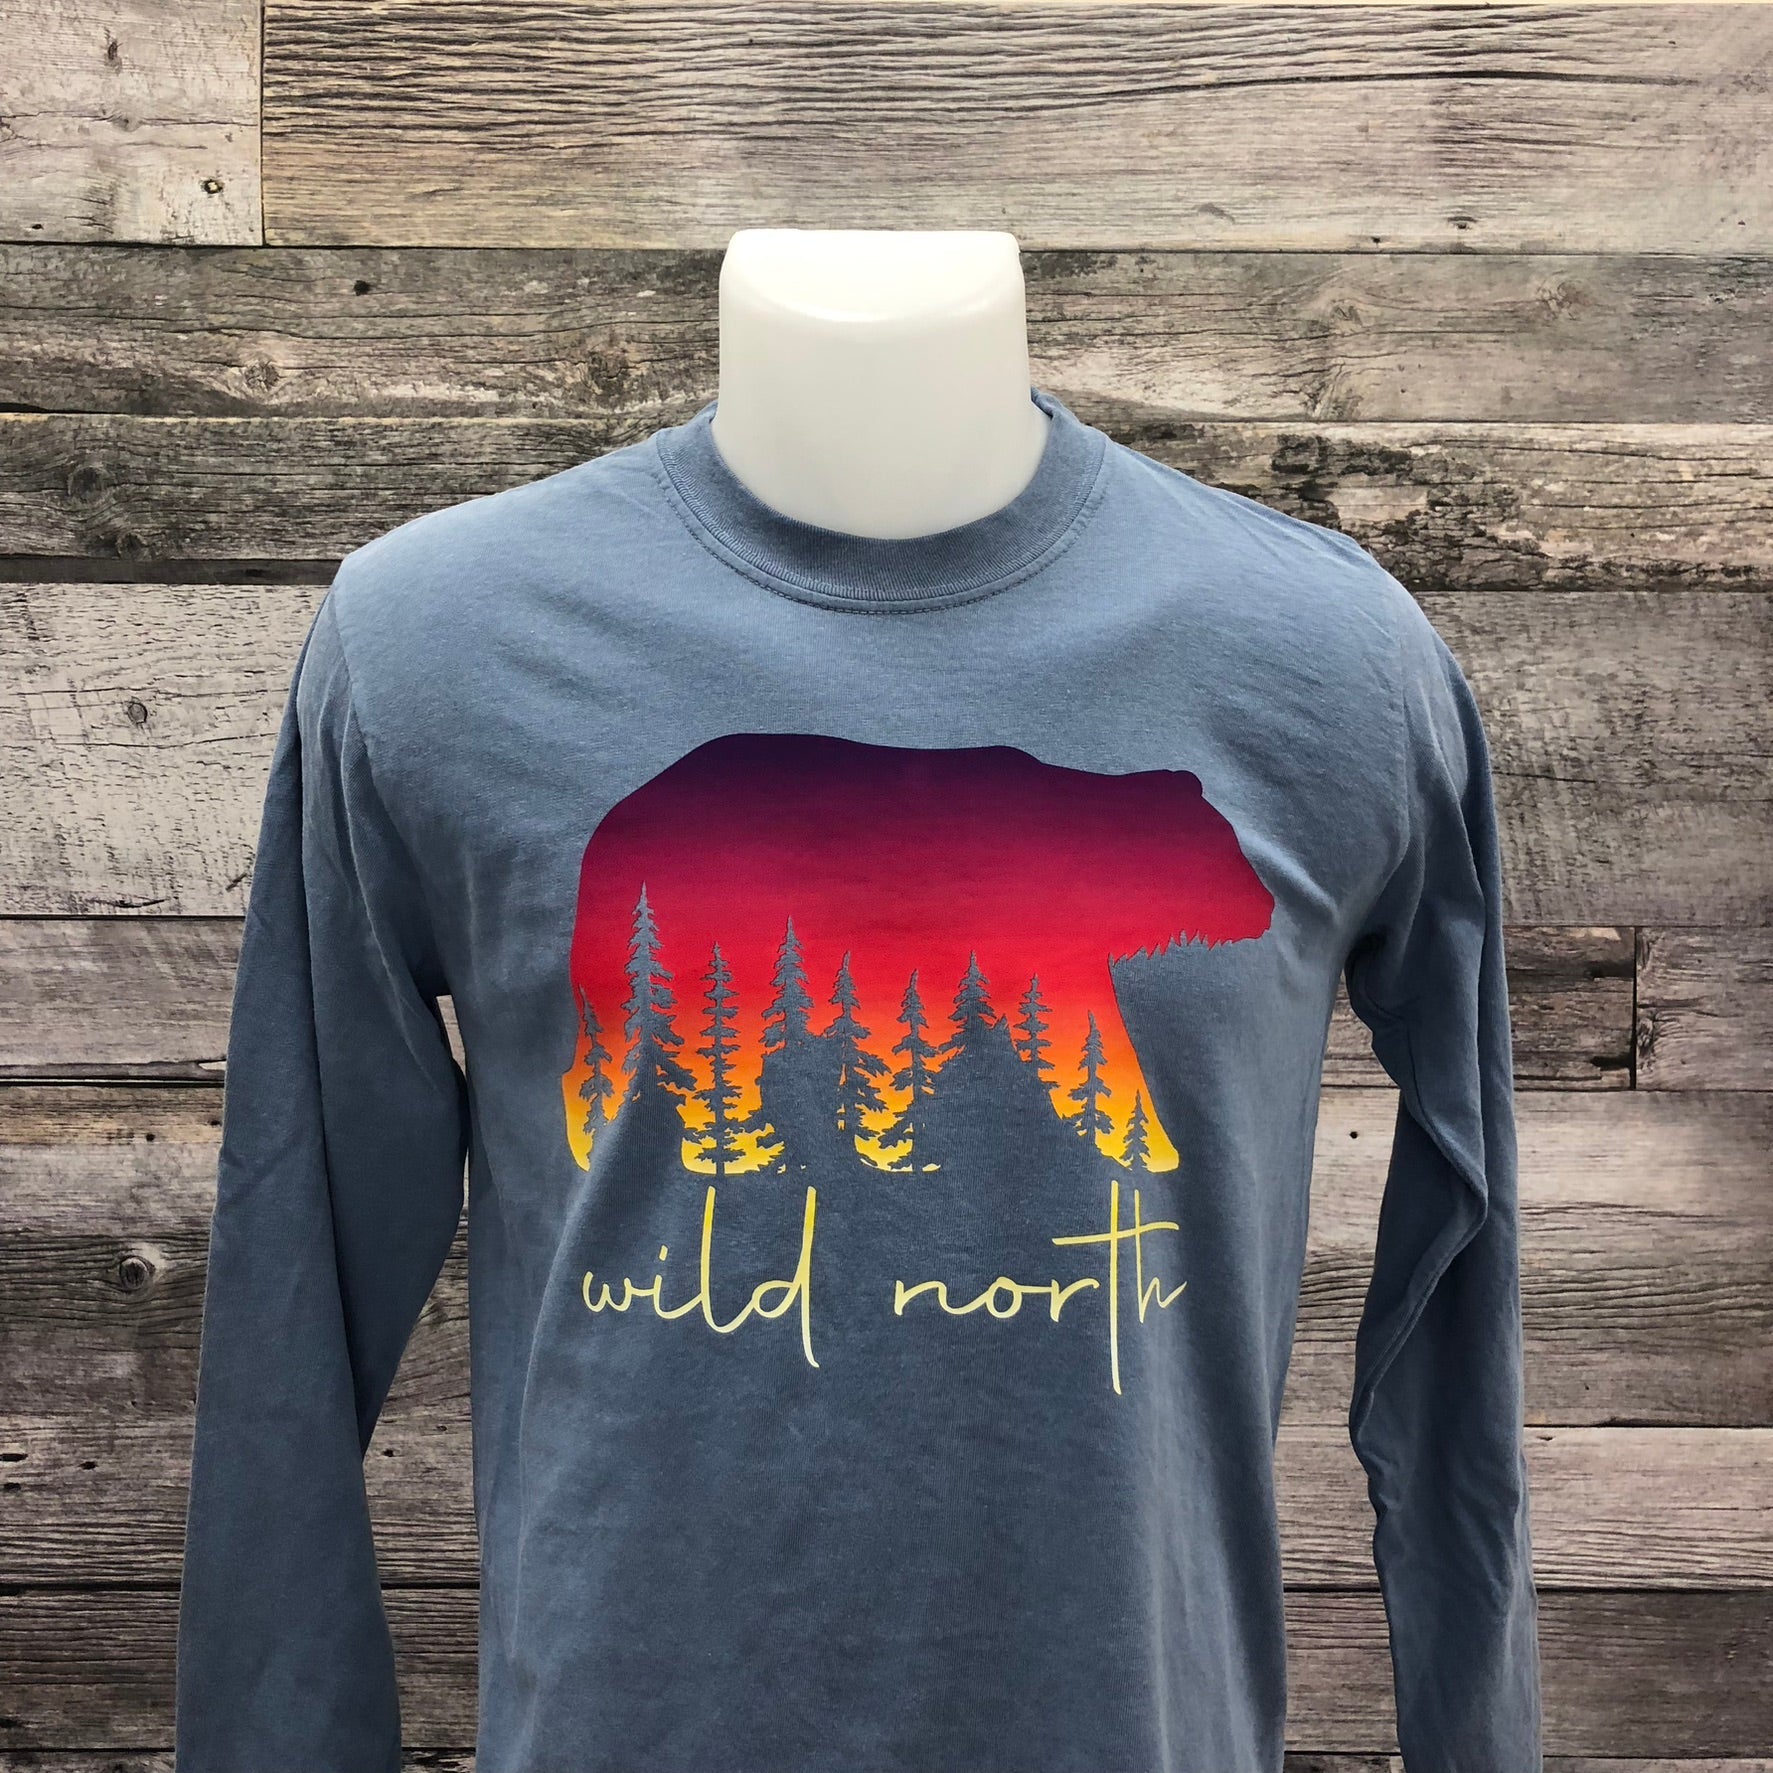 Wild North Sunset Bear - Unisex Long Sleeve Tshirt - Blue Jean Color